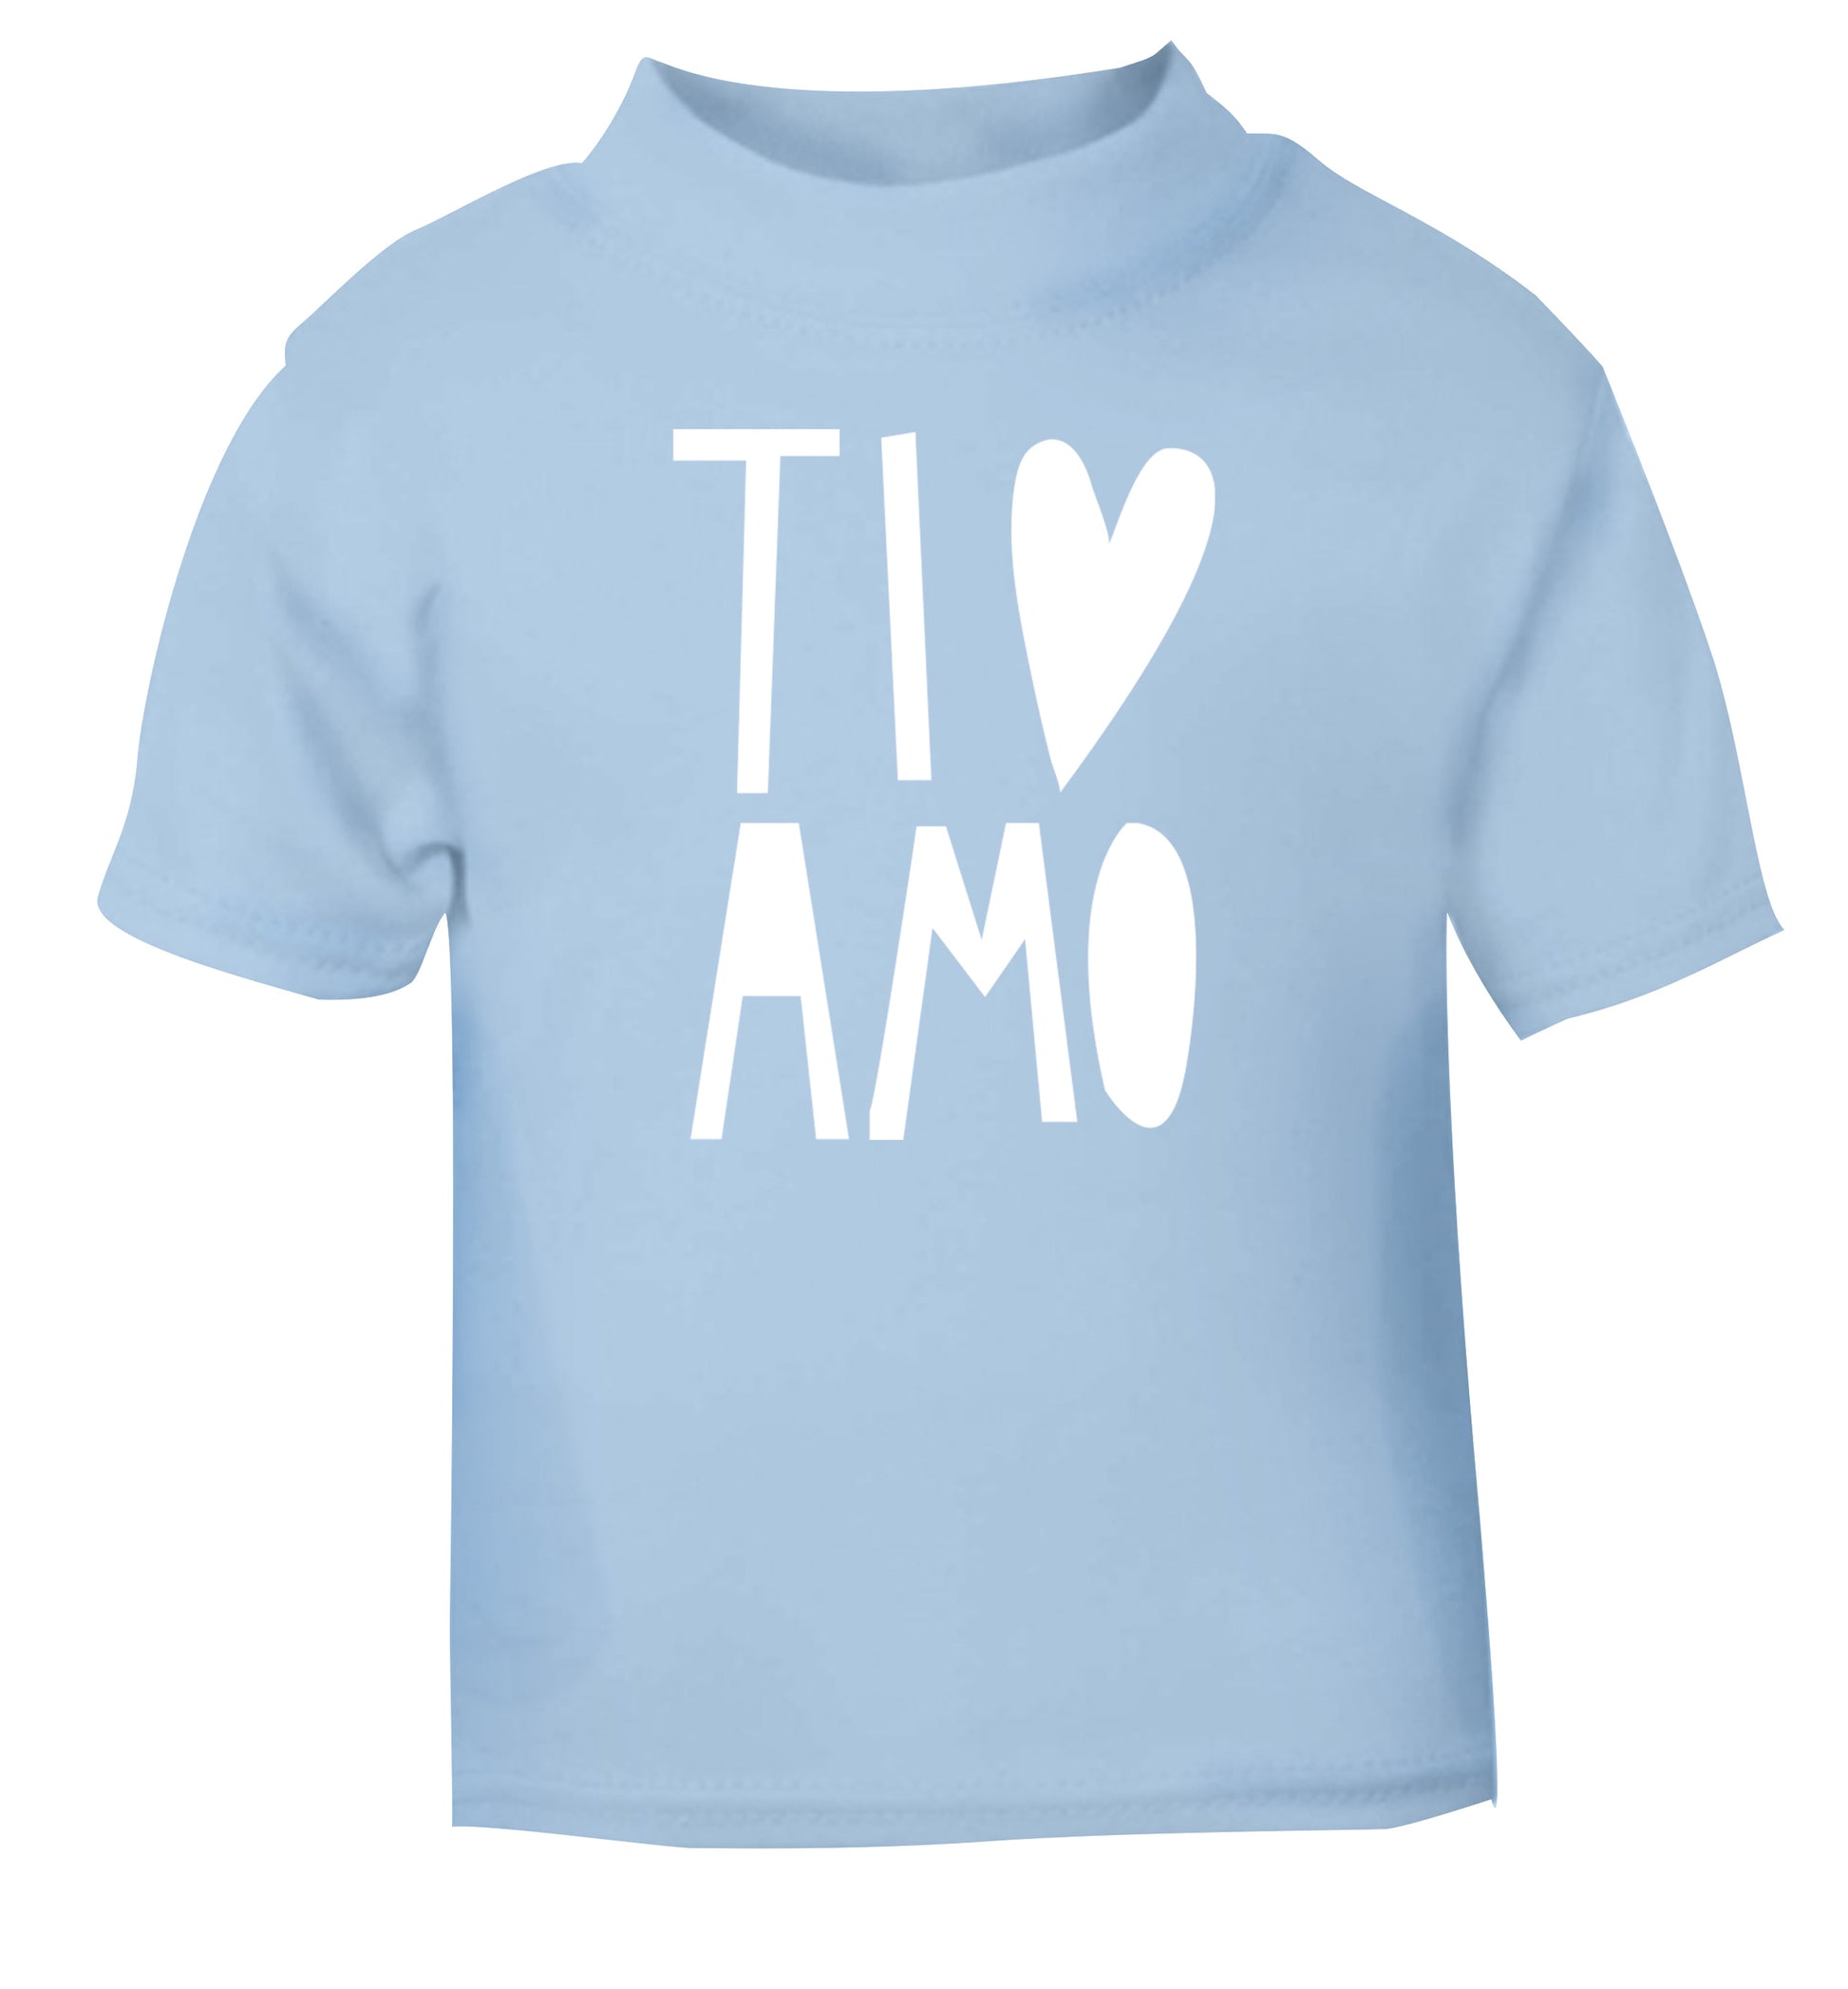 Ti amo - I love you light blue Baby Toddler Tshirt 2 Years